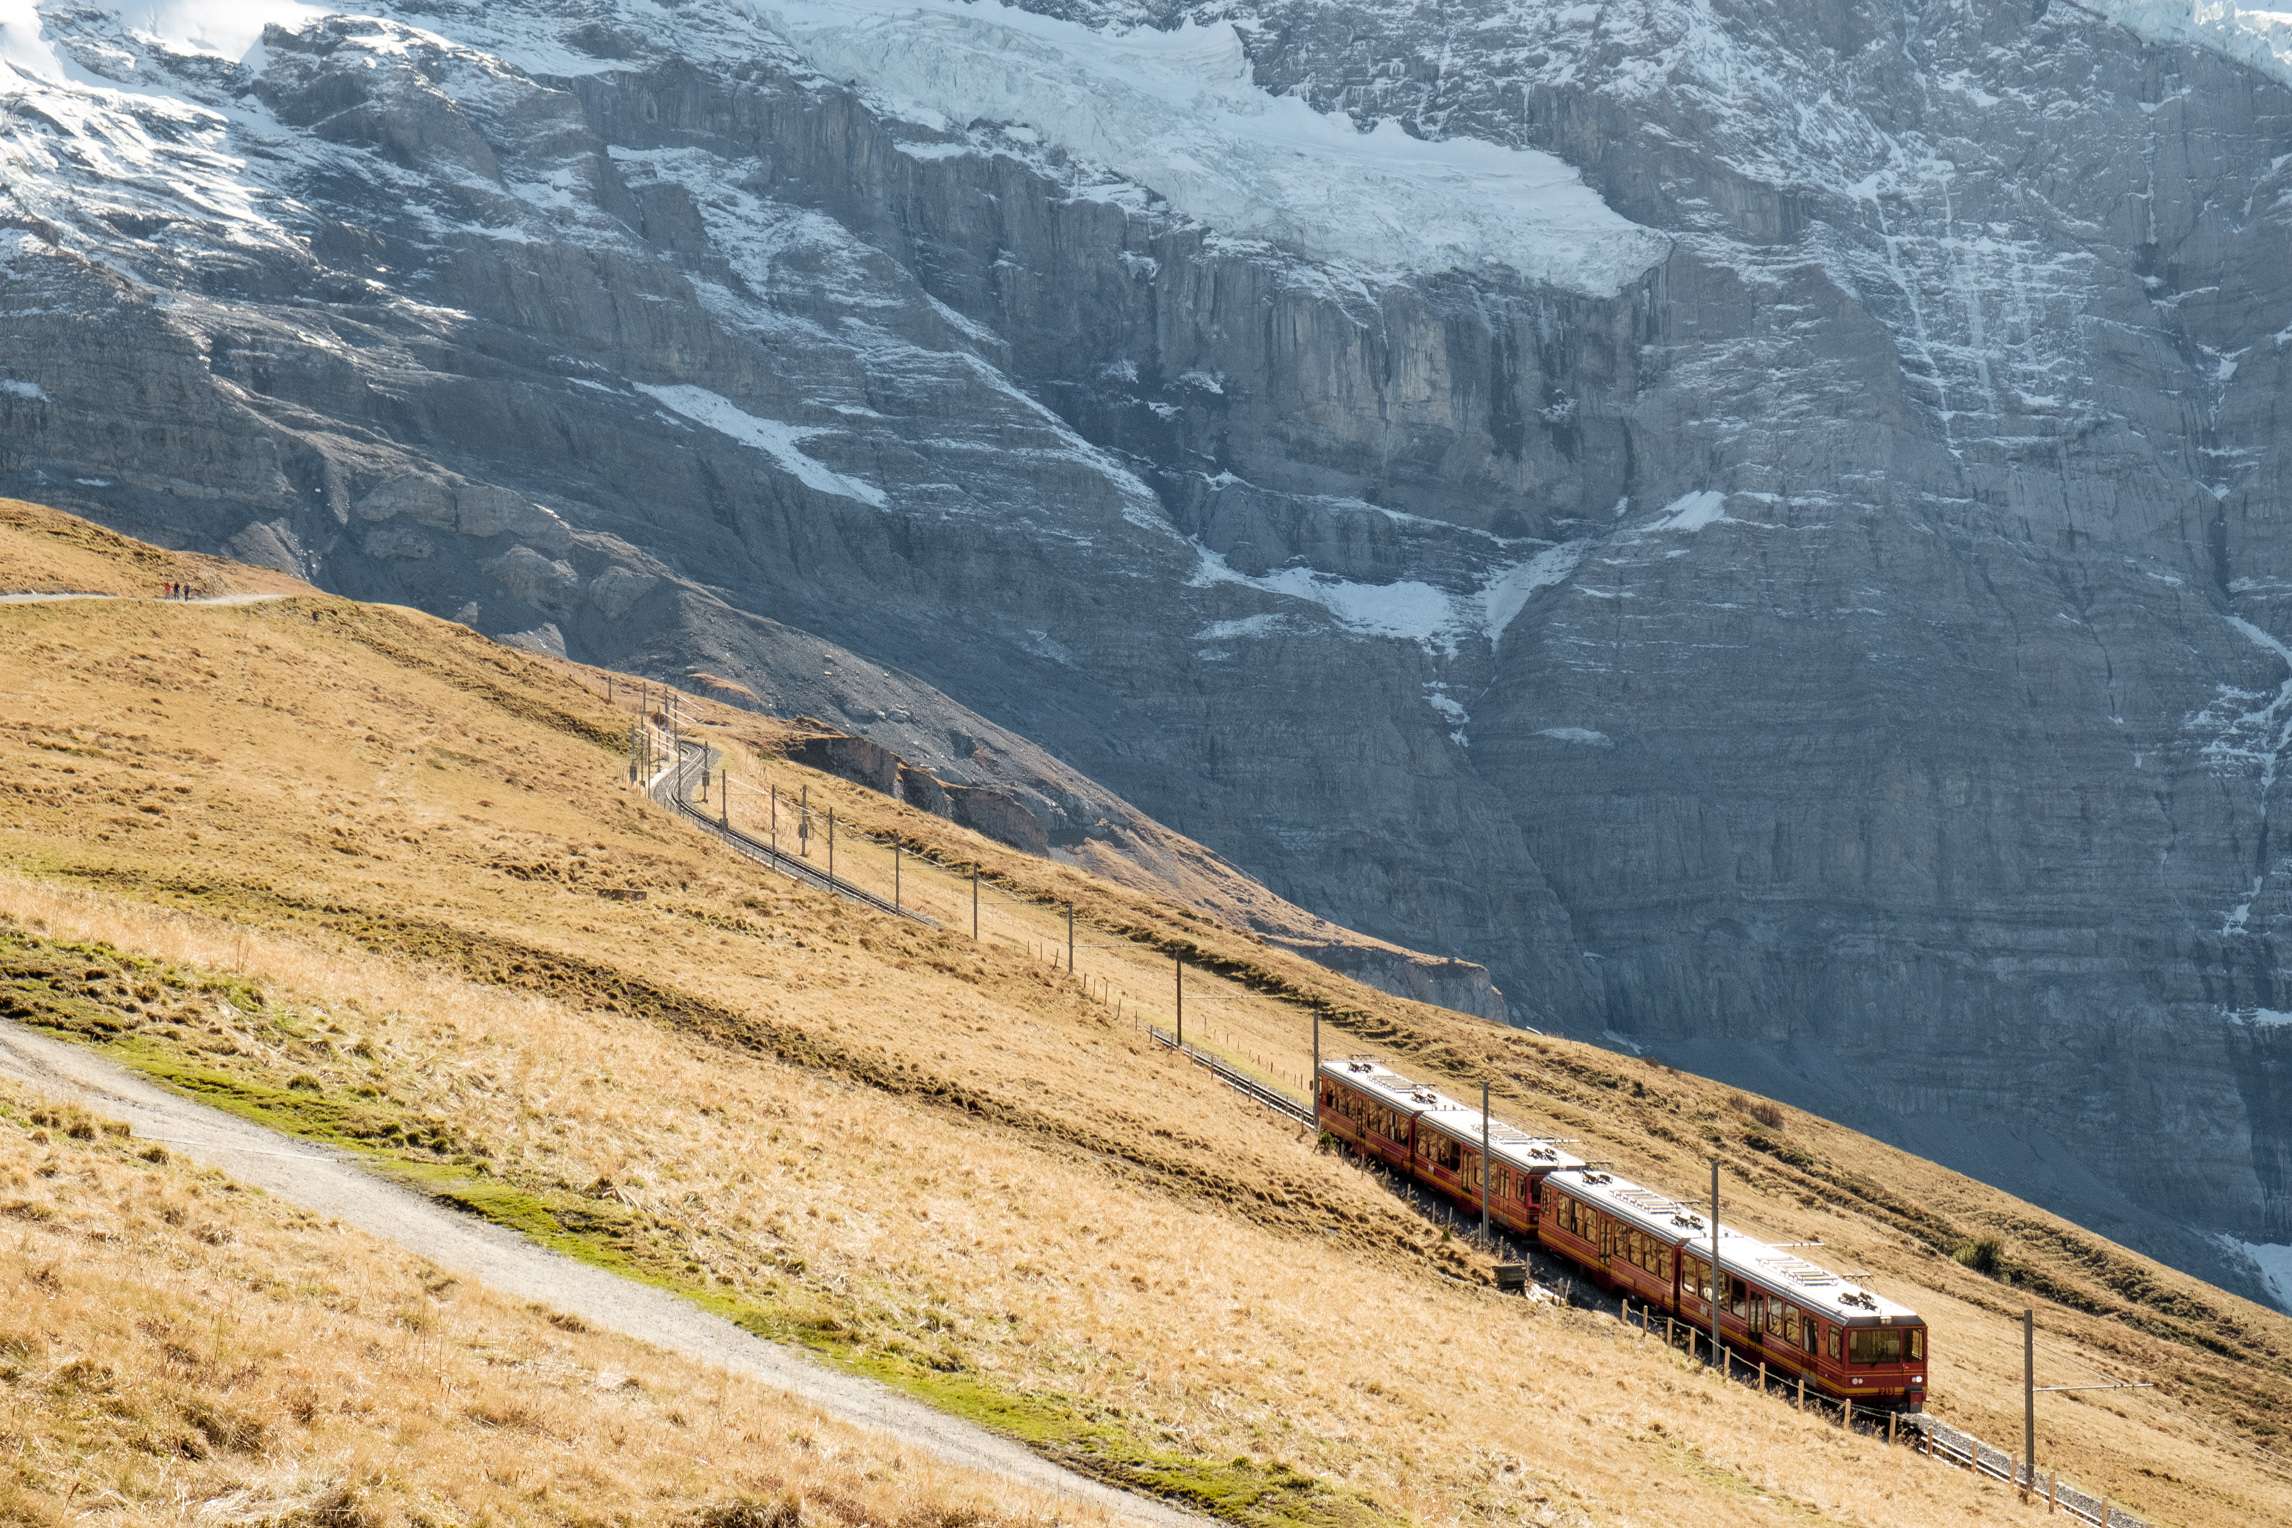 Jungfrau train leaving Kleine Scheidegg